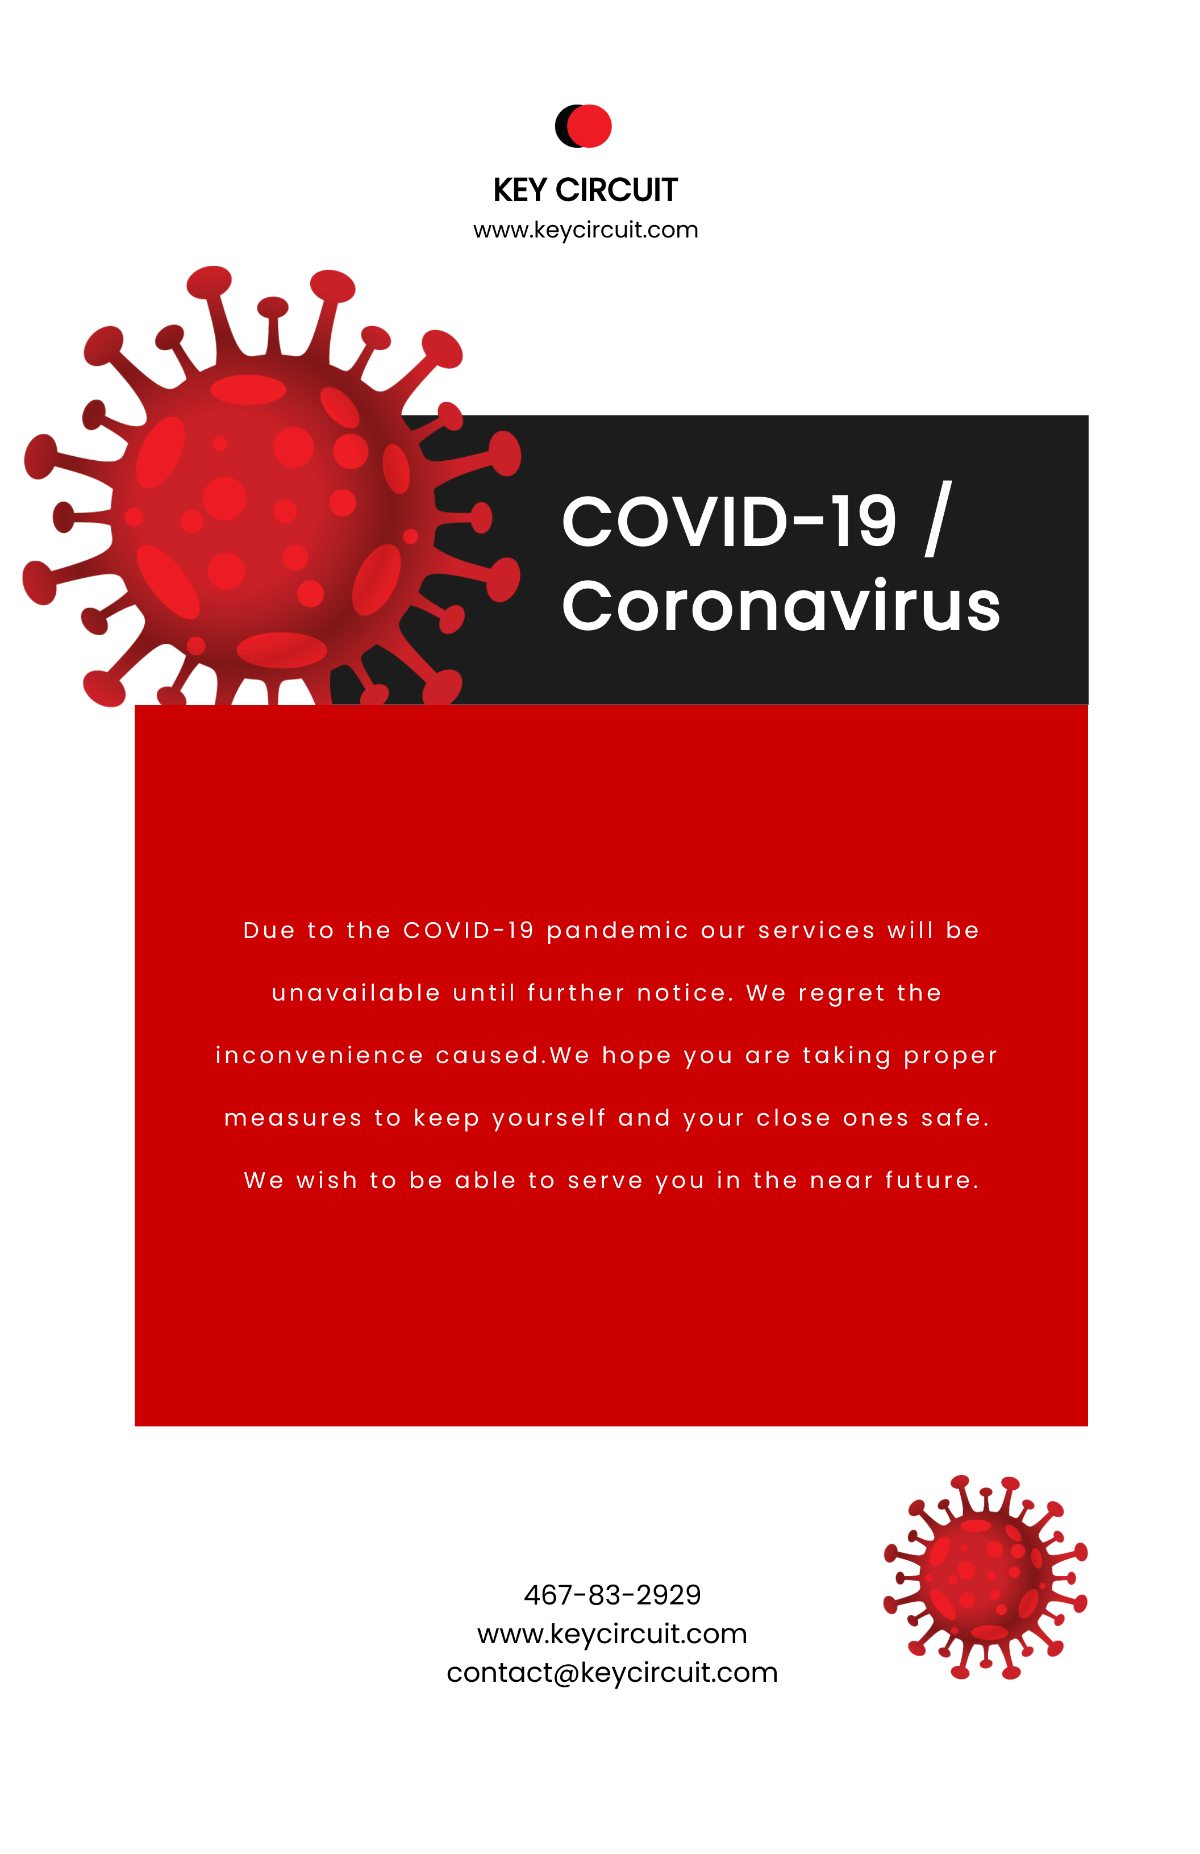 Coronavirus COVID-19 Lock Down Shop Poster Template